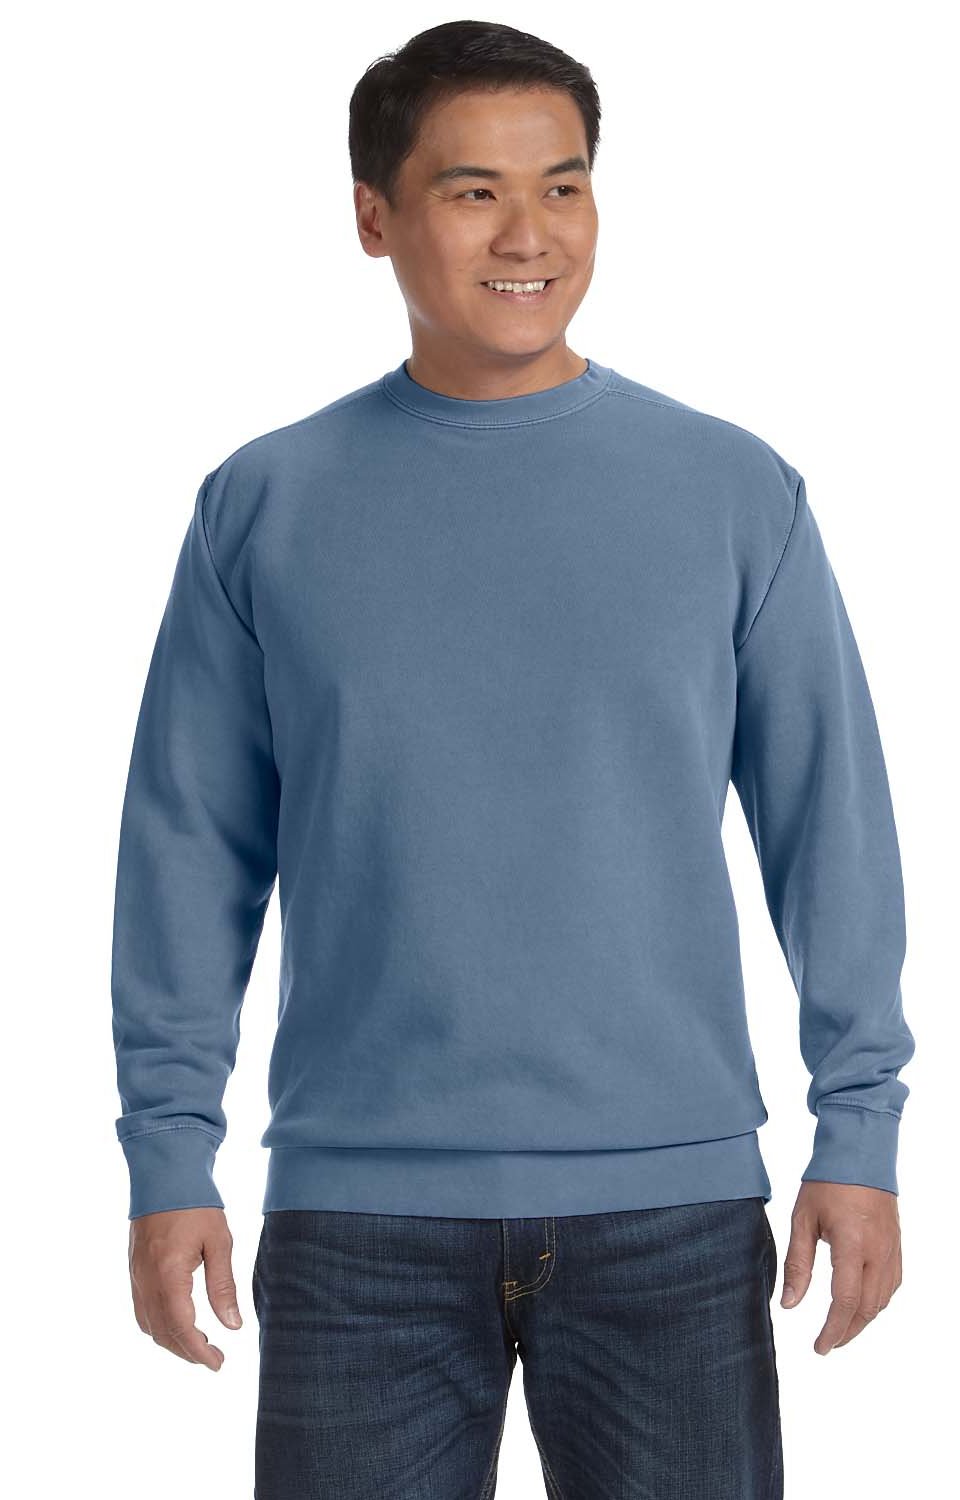 blue sweatshirt with blue jeans